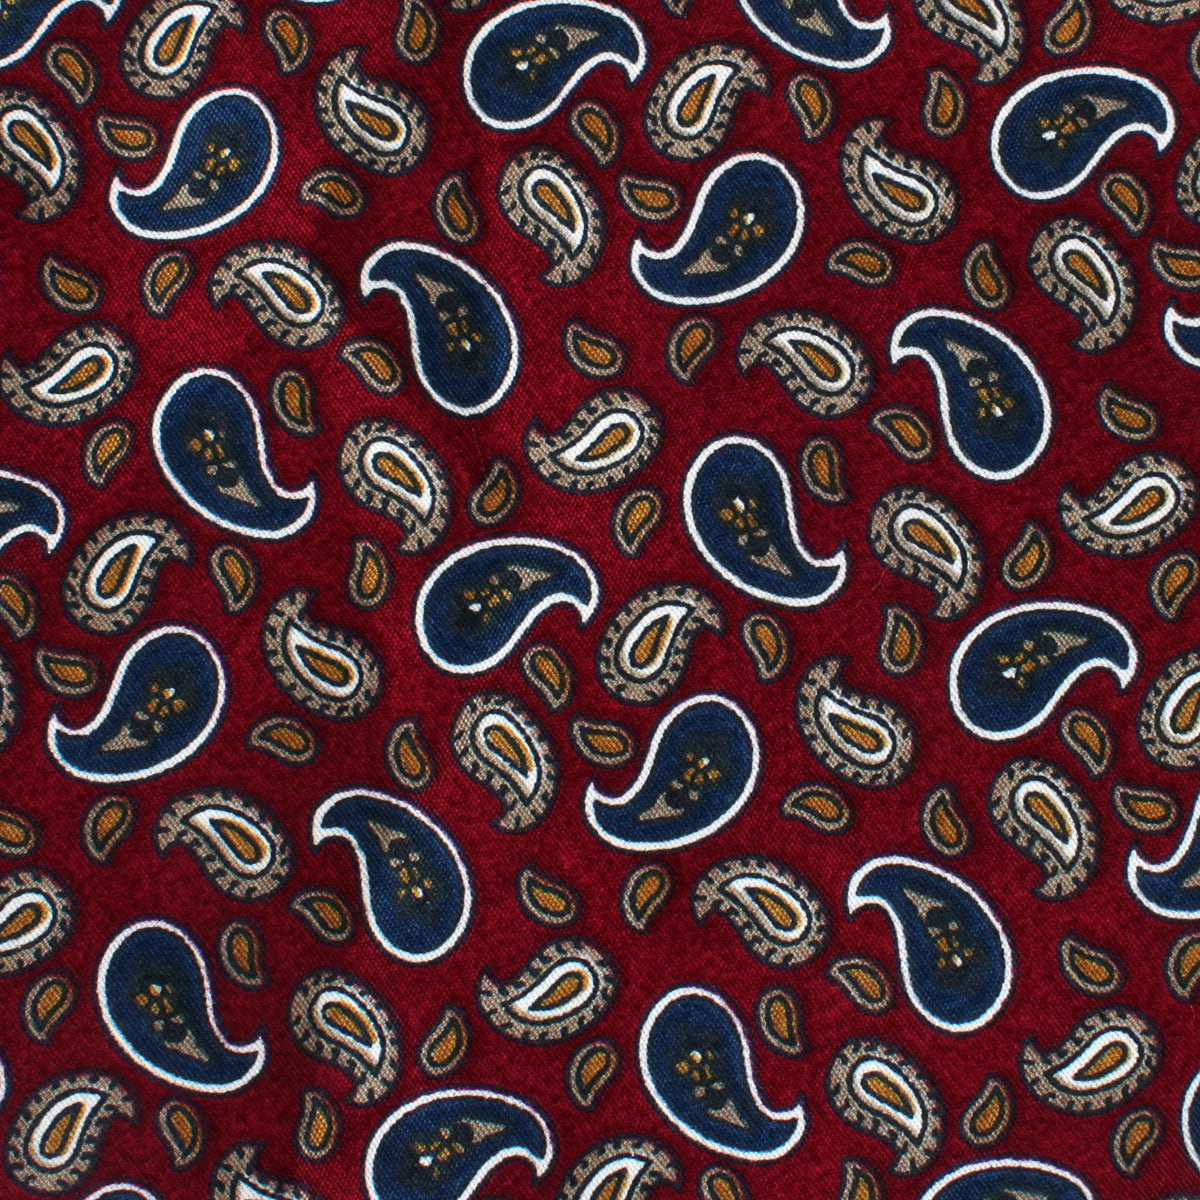 Shah of Iran Burgundy Paisley Necktie Fabric